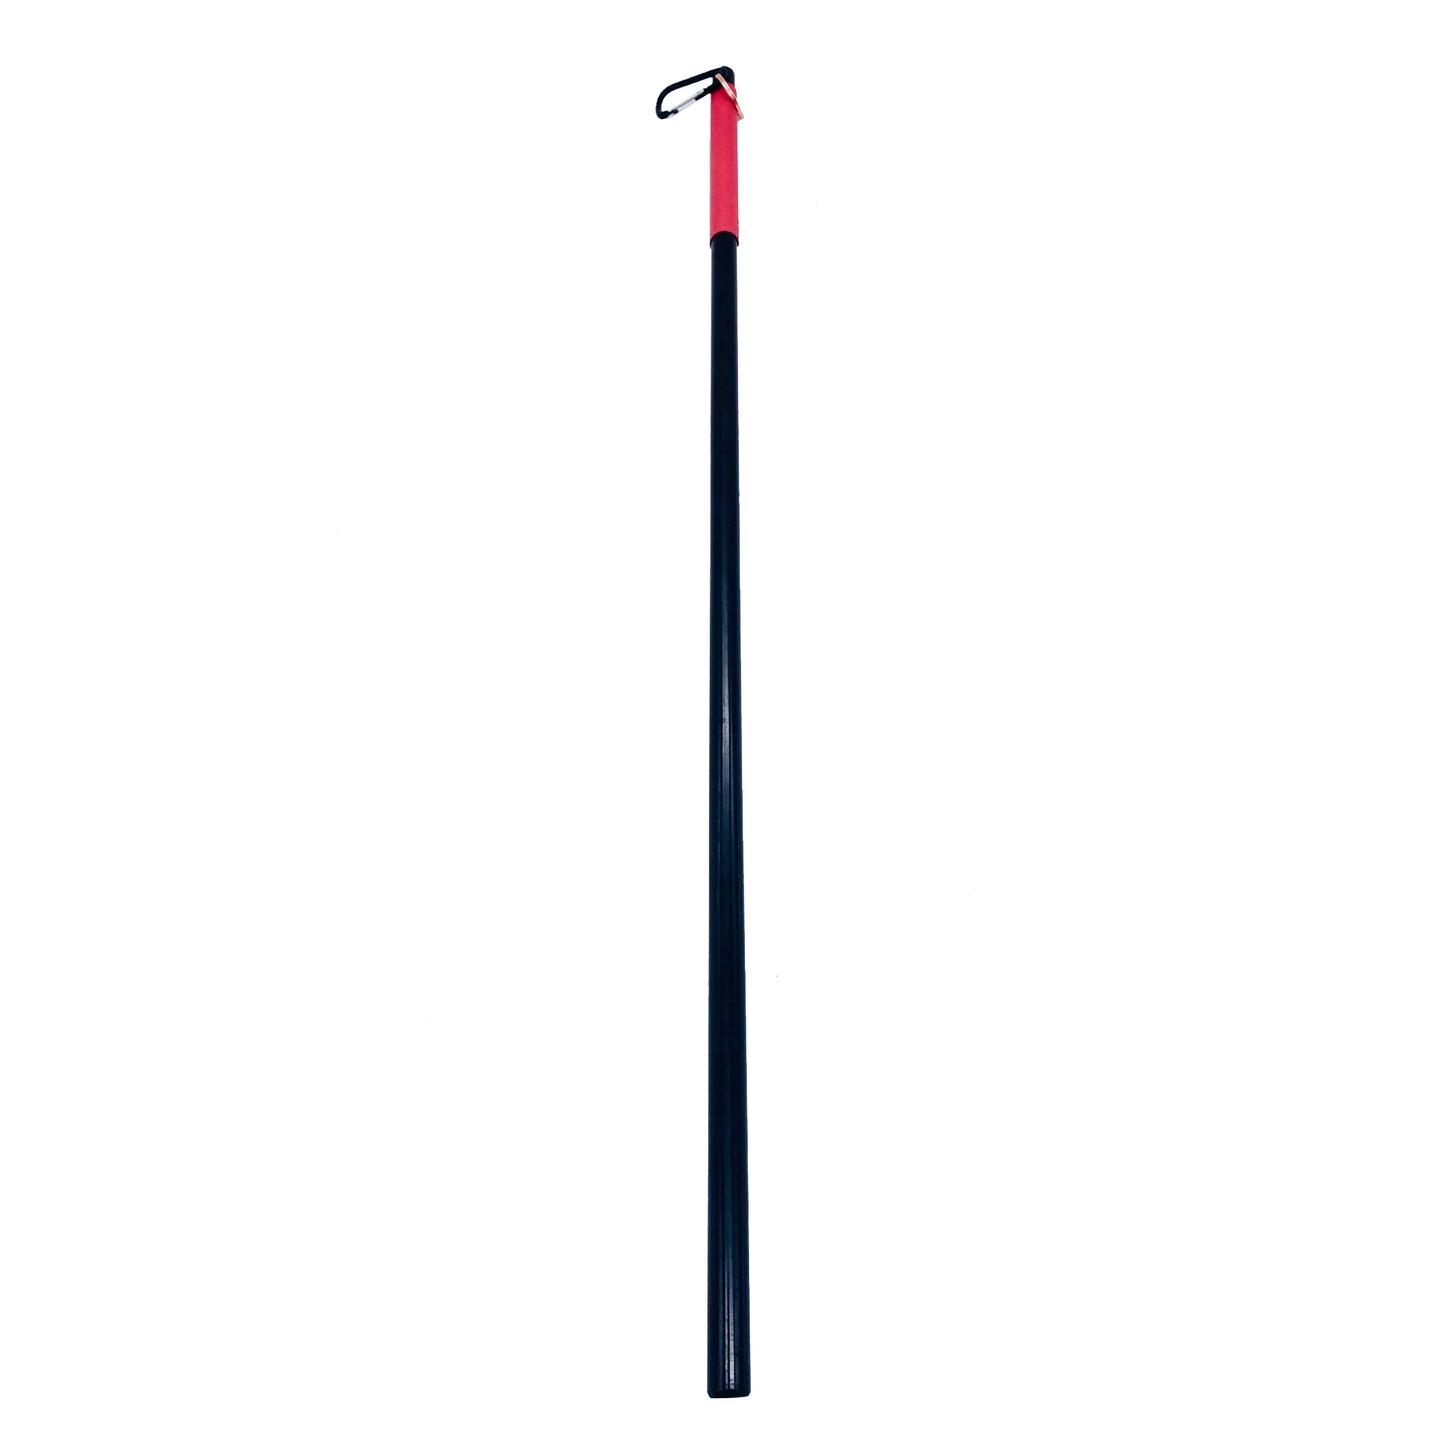 Lexan cane, polycarbonate cane, Lexan, polycarbonate, evil stick, Cane, spanking cane, cane, bdsm, impact, punishment, discipline